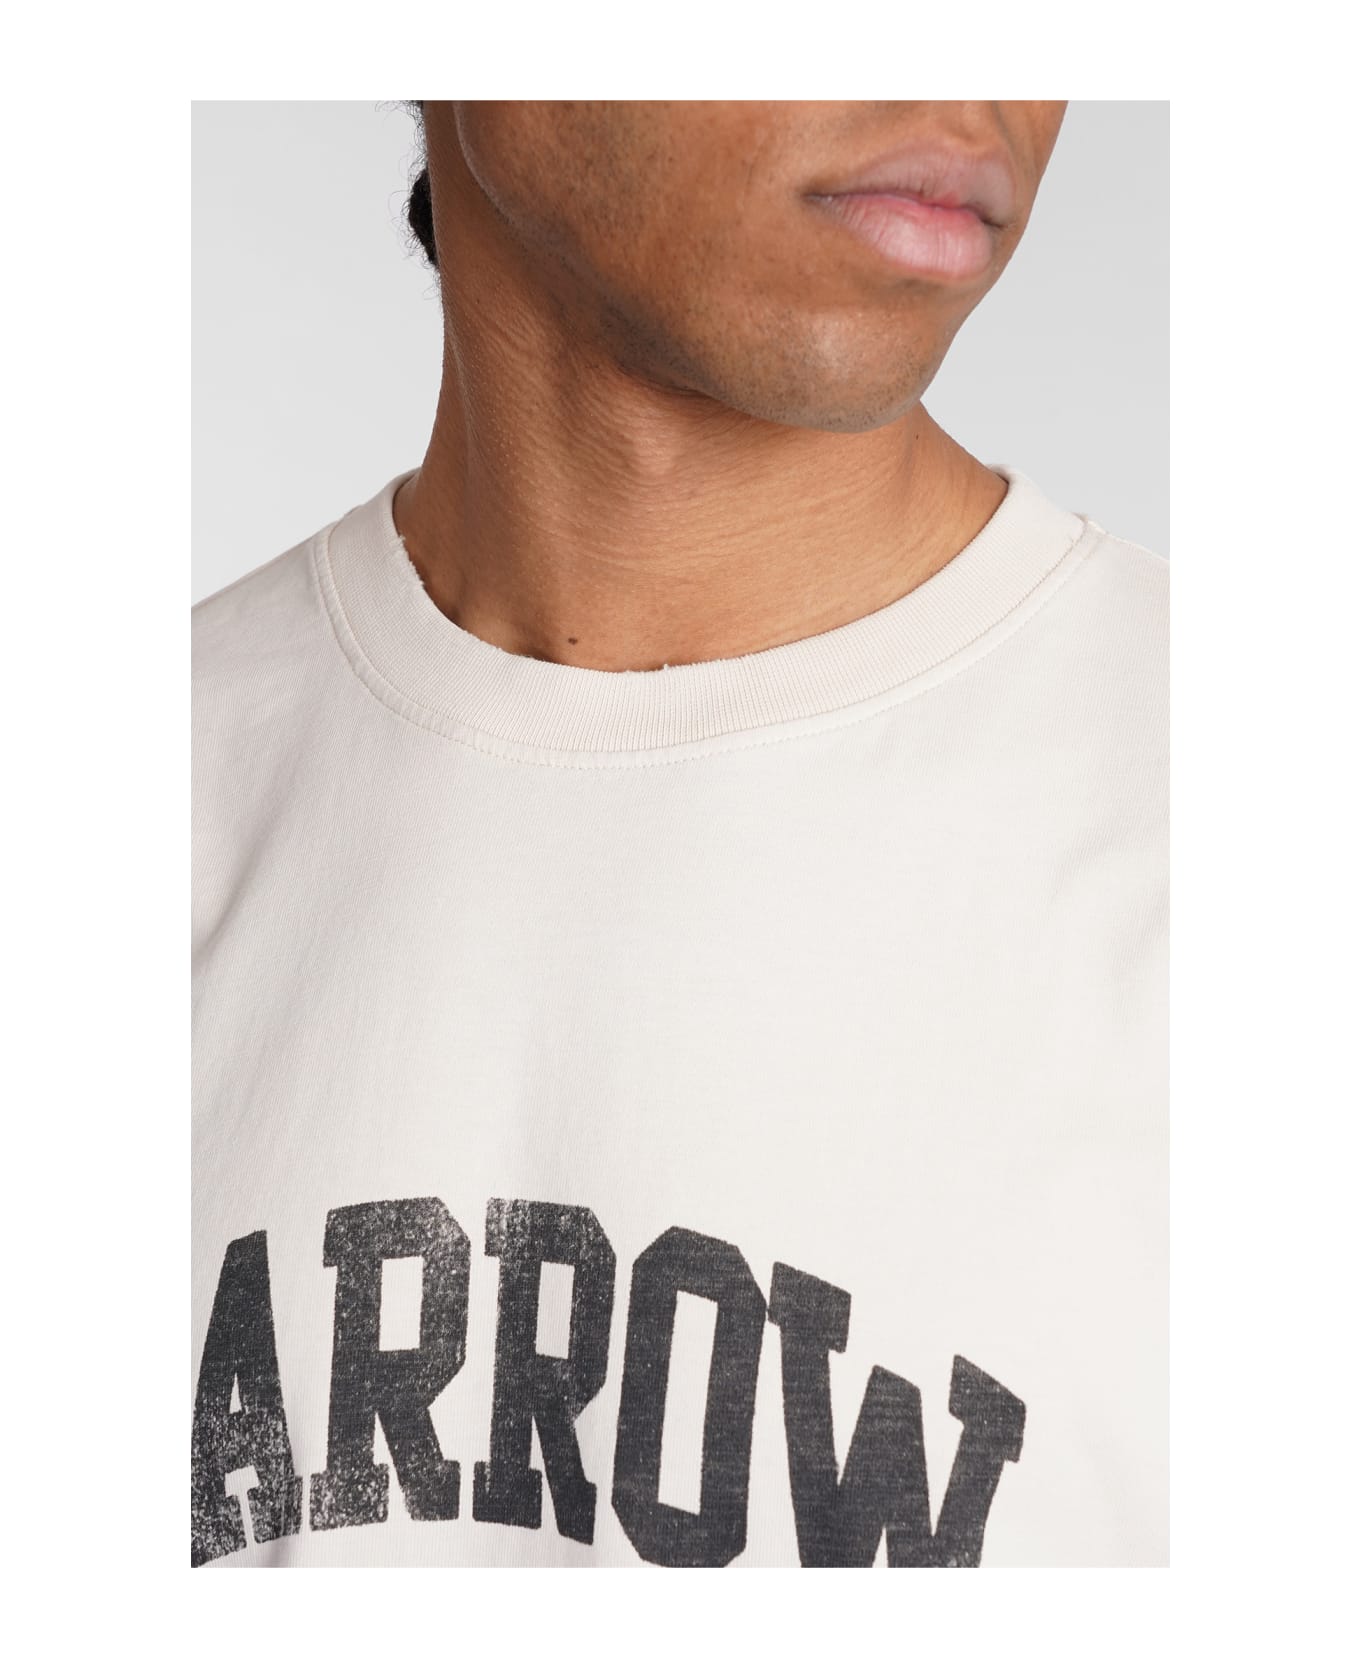 Barrow T-shirt In Beige Cotton